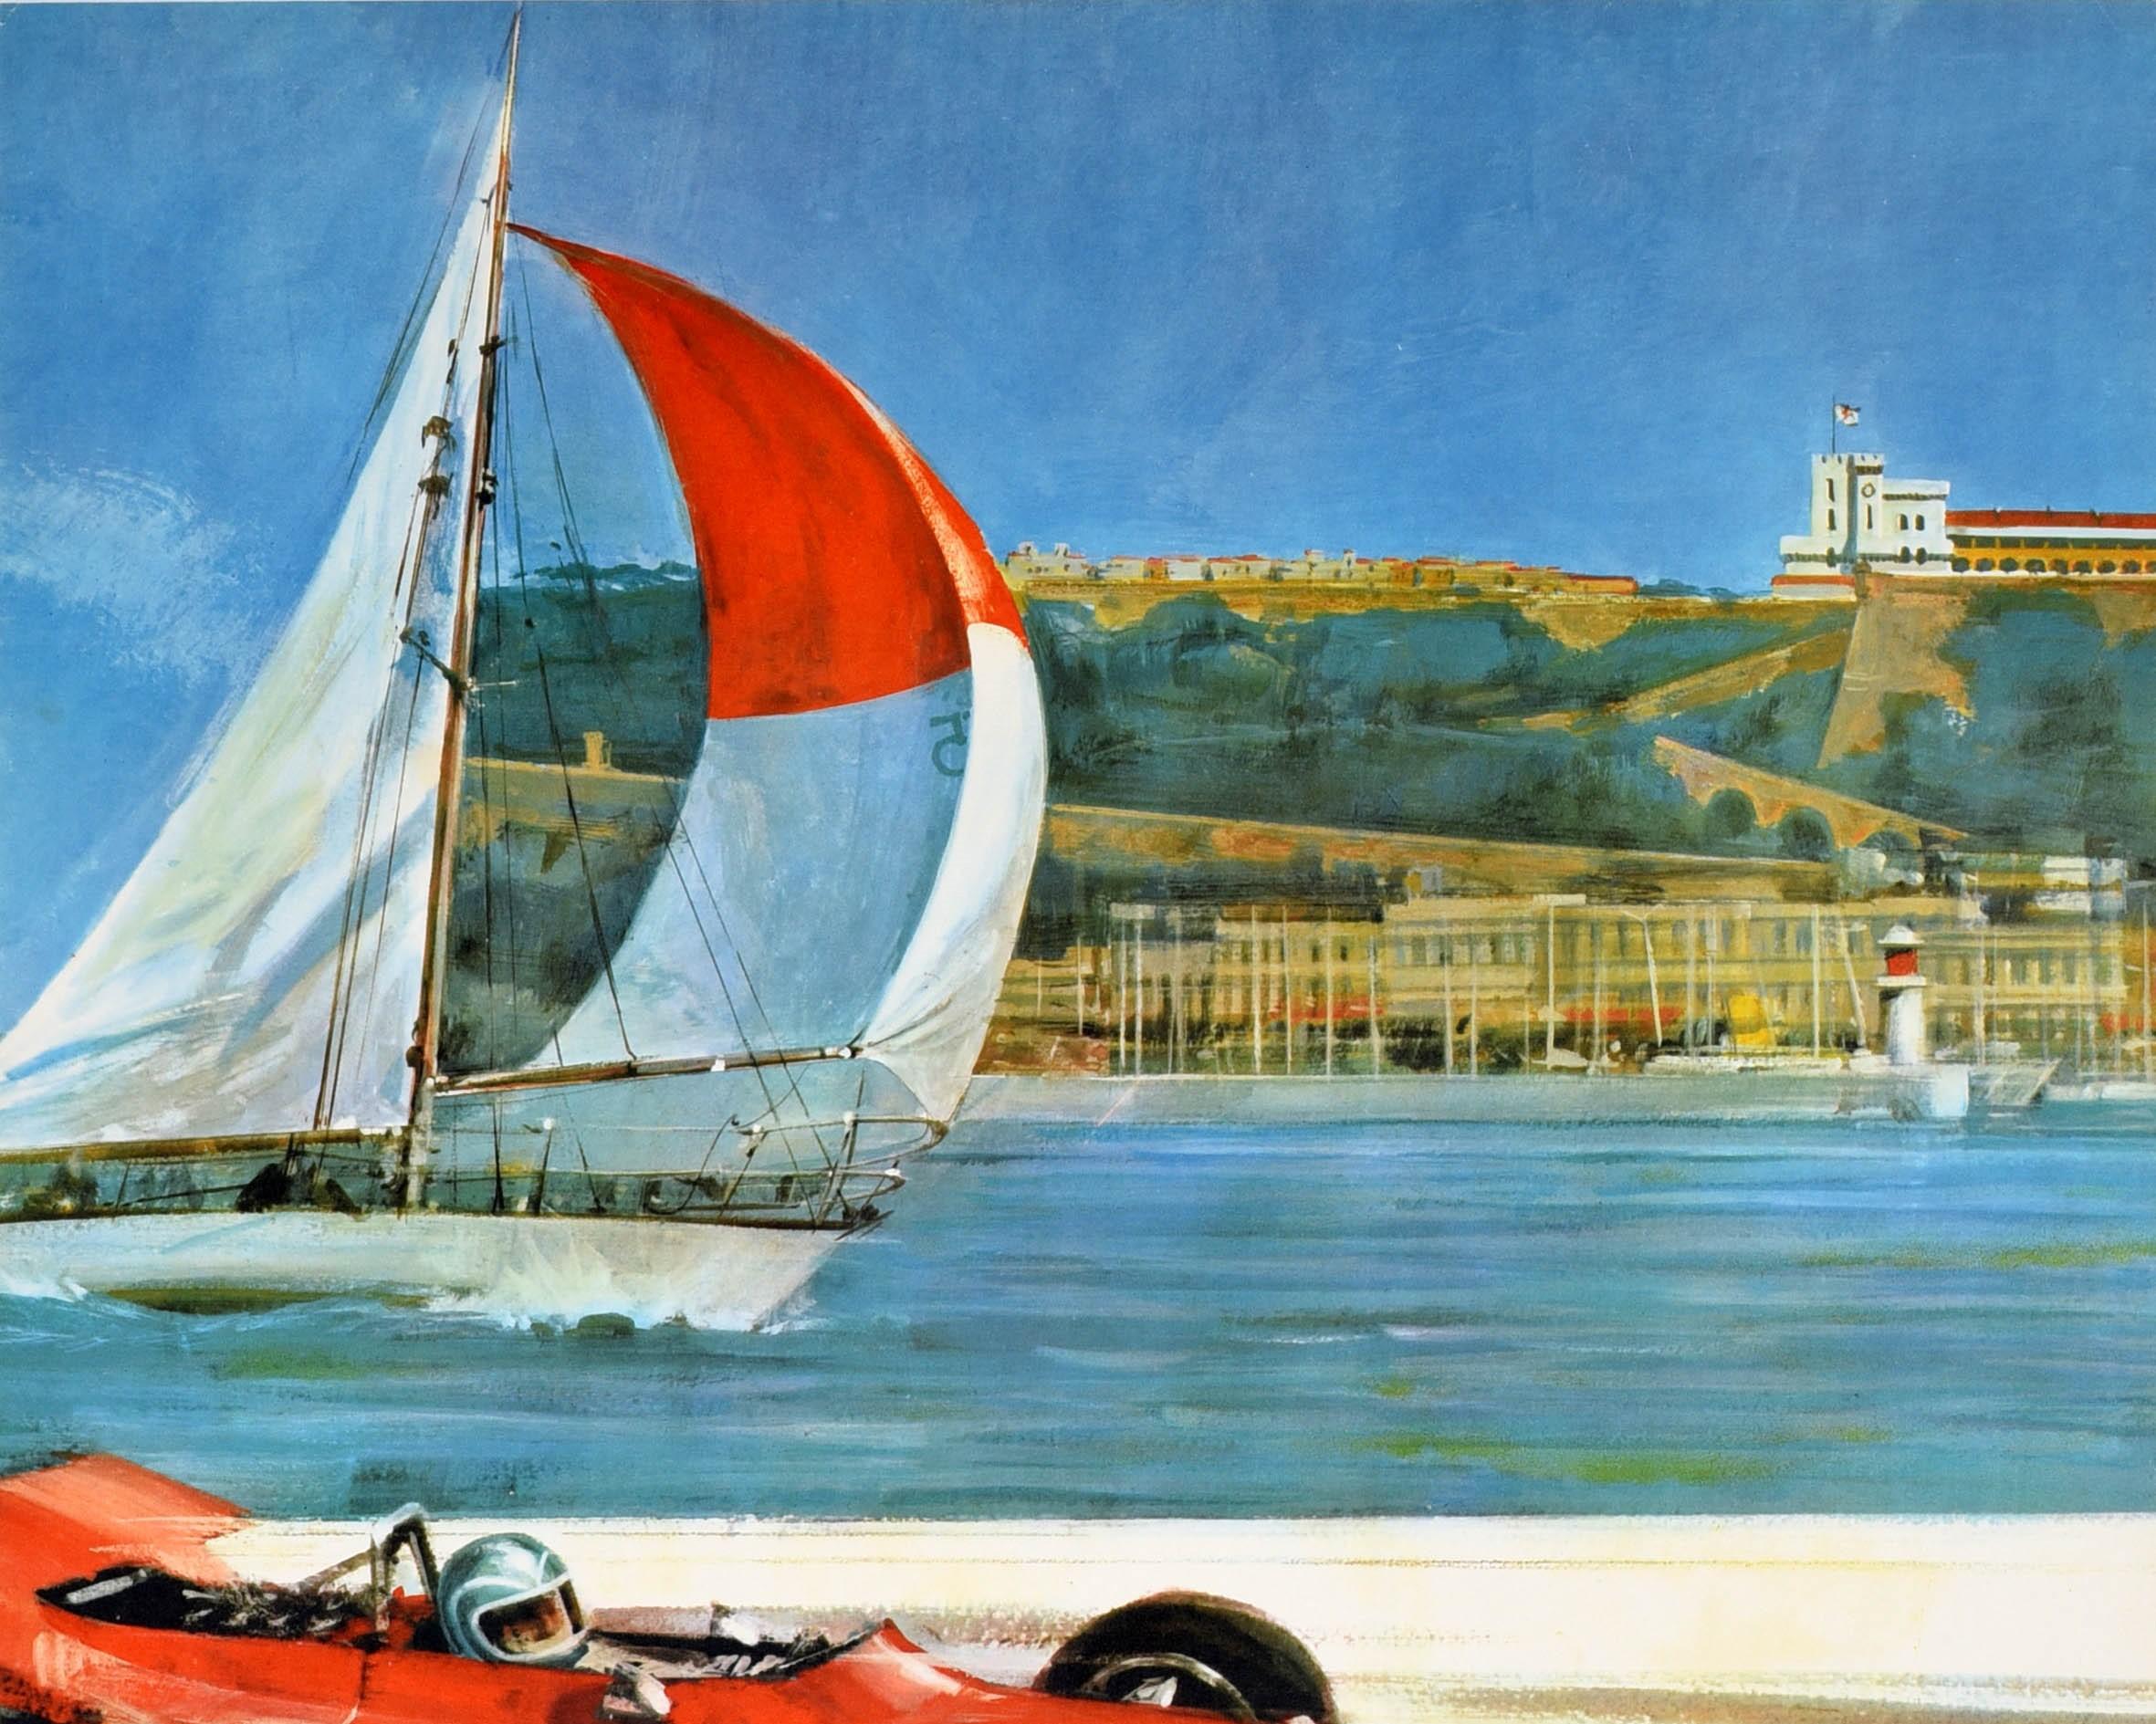 Original Vintage Motorsport Poster Monaco Grand Prix 1970 Formula 1 Race Sailing - Print by Michael Turner